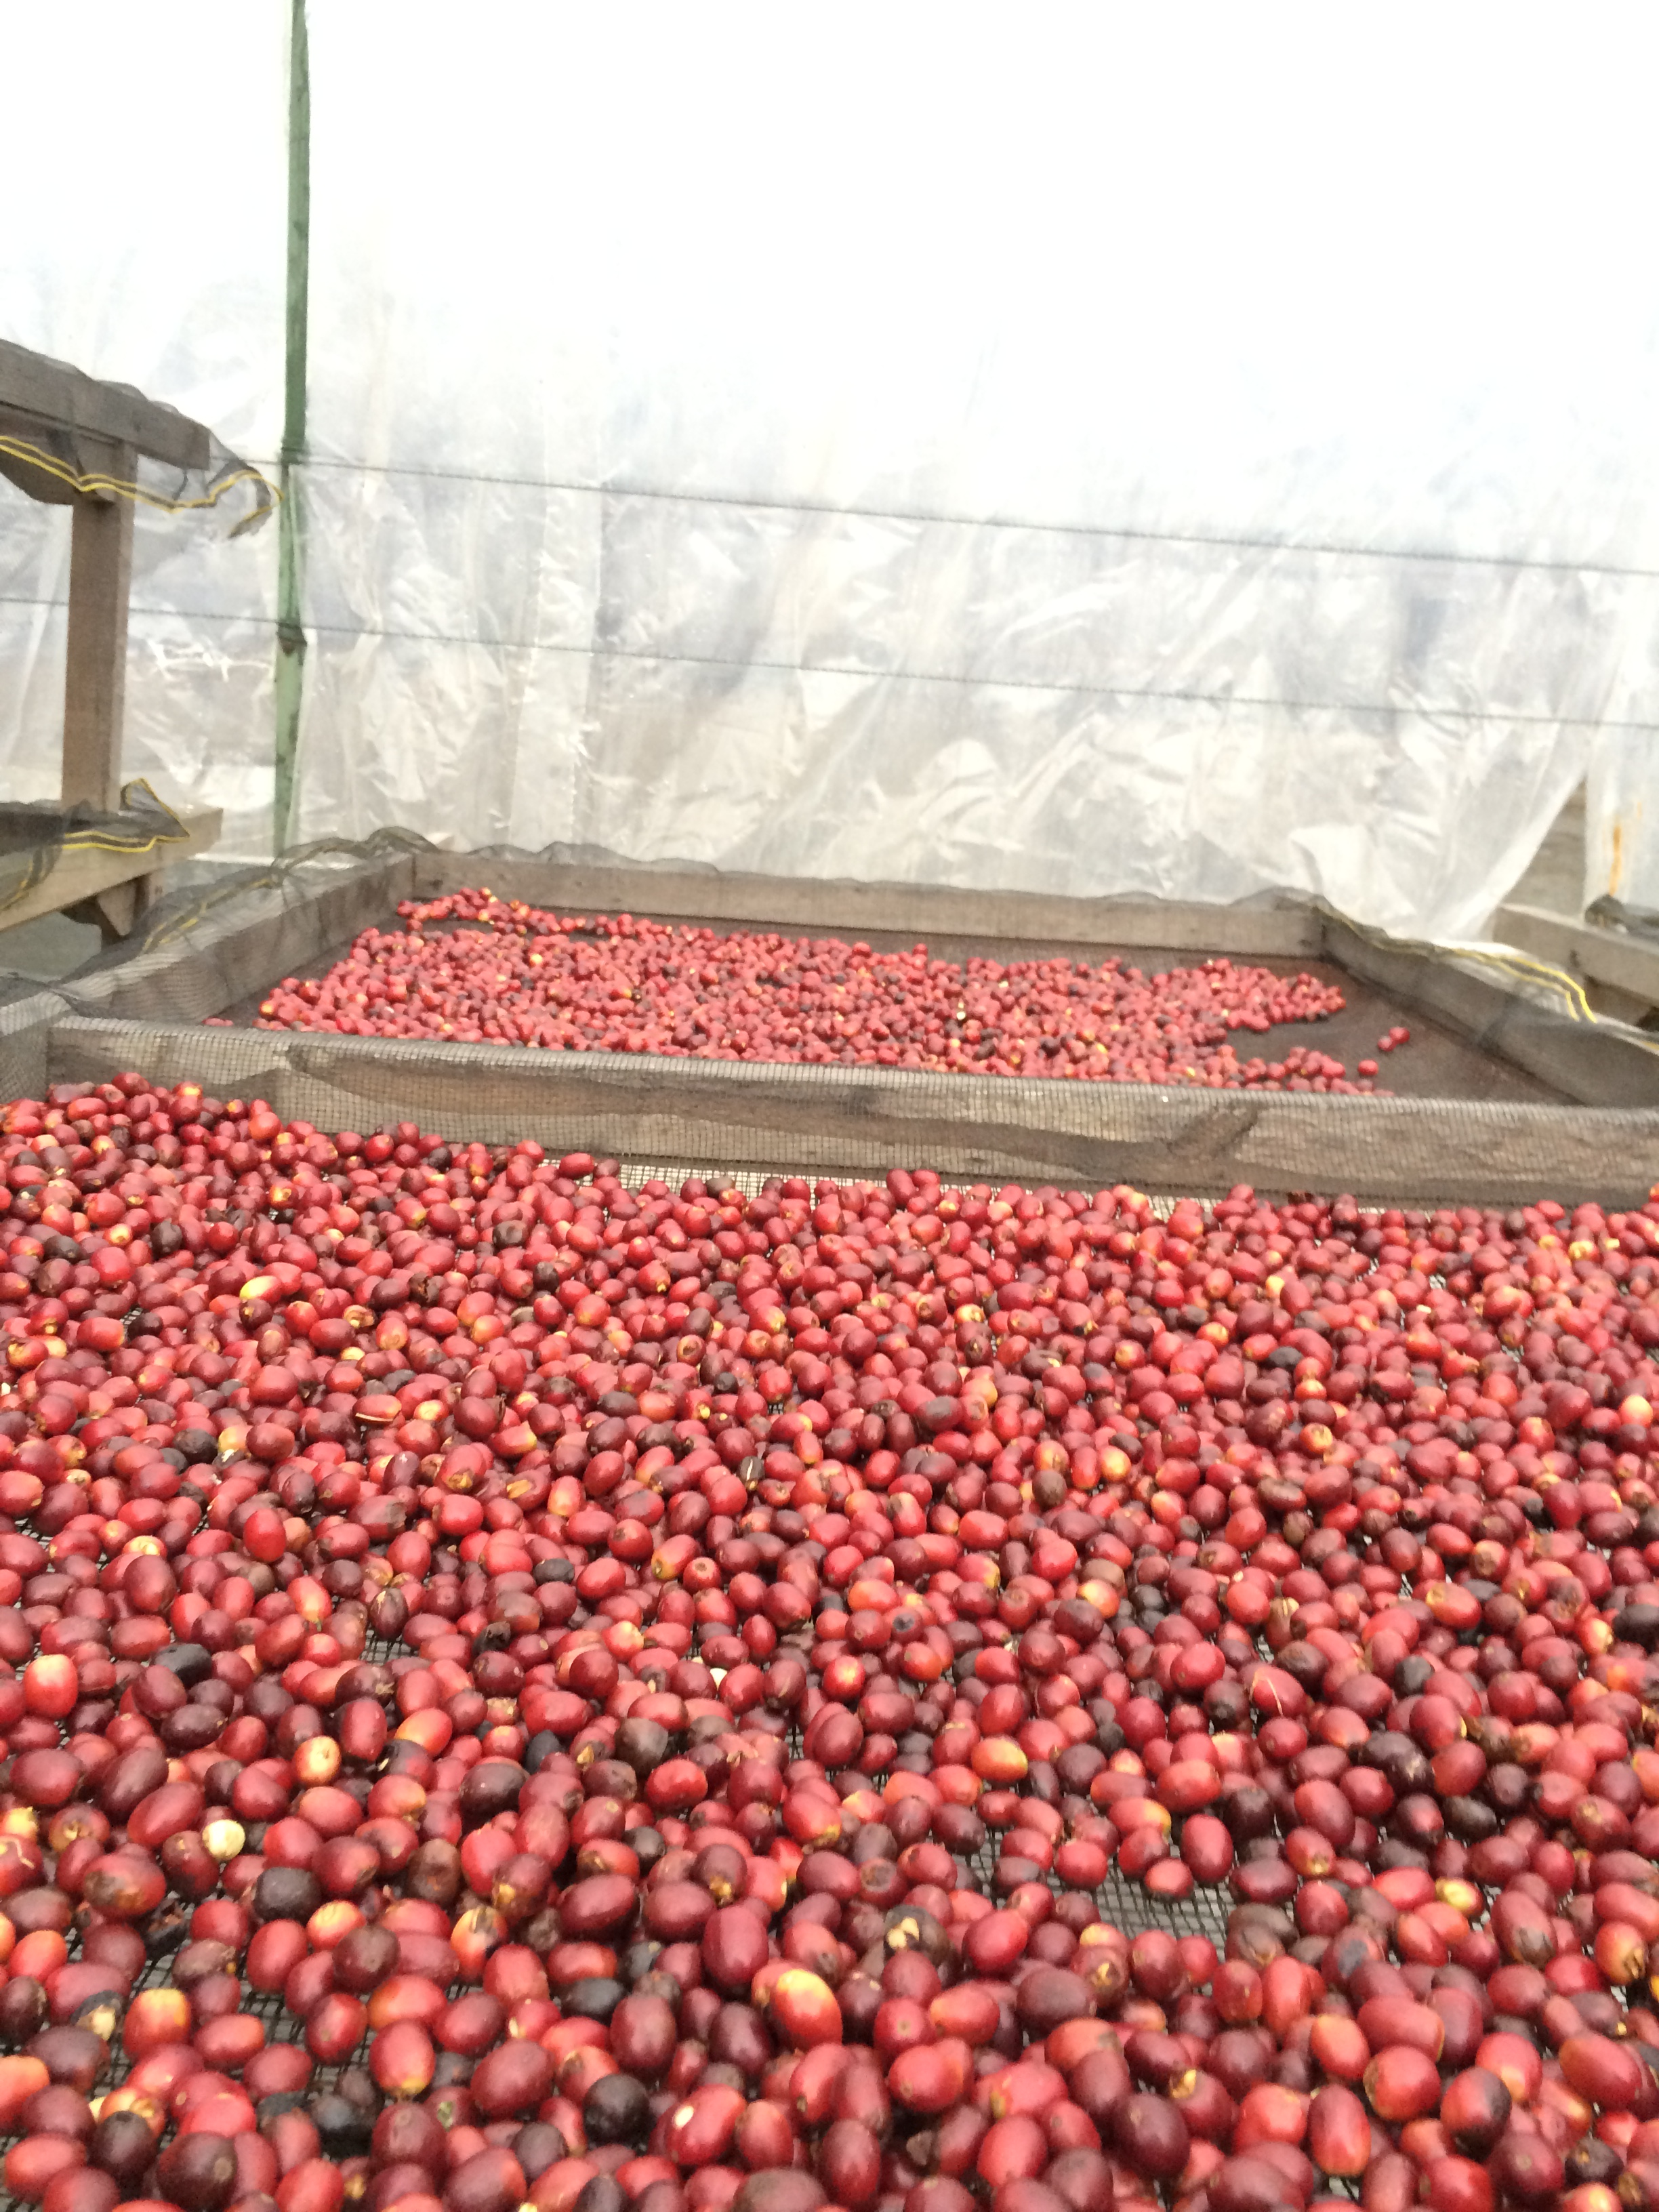 Unwashed Sumatran coffee cherries on raised beds